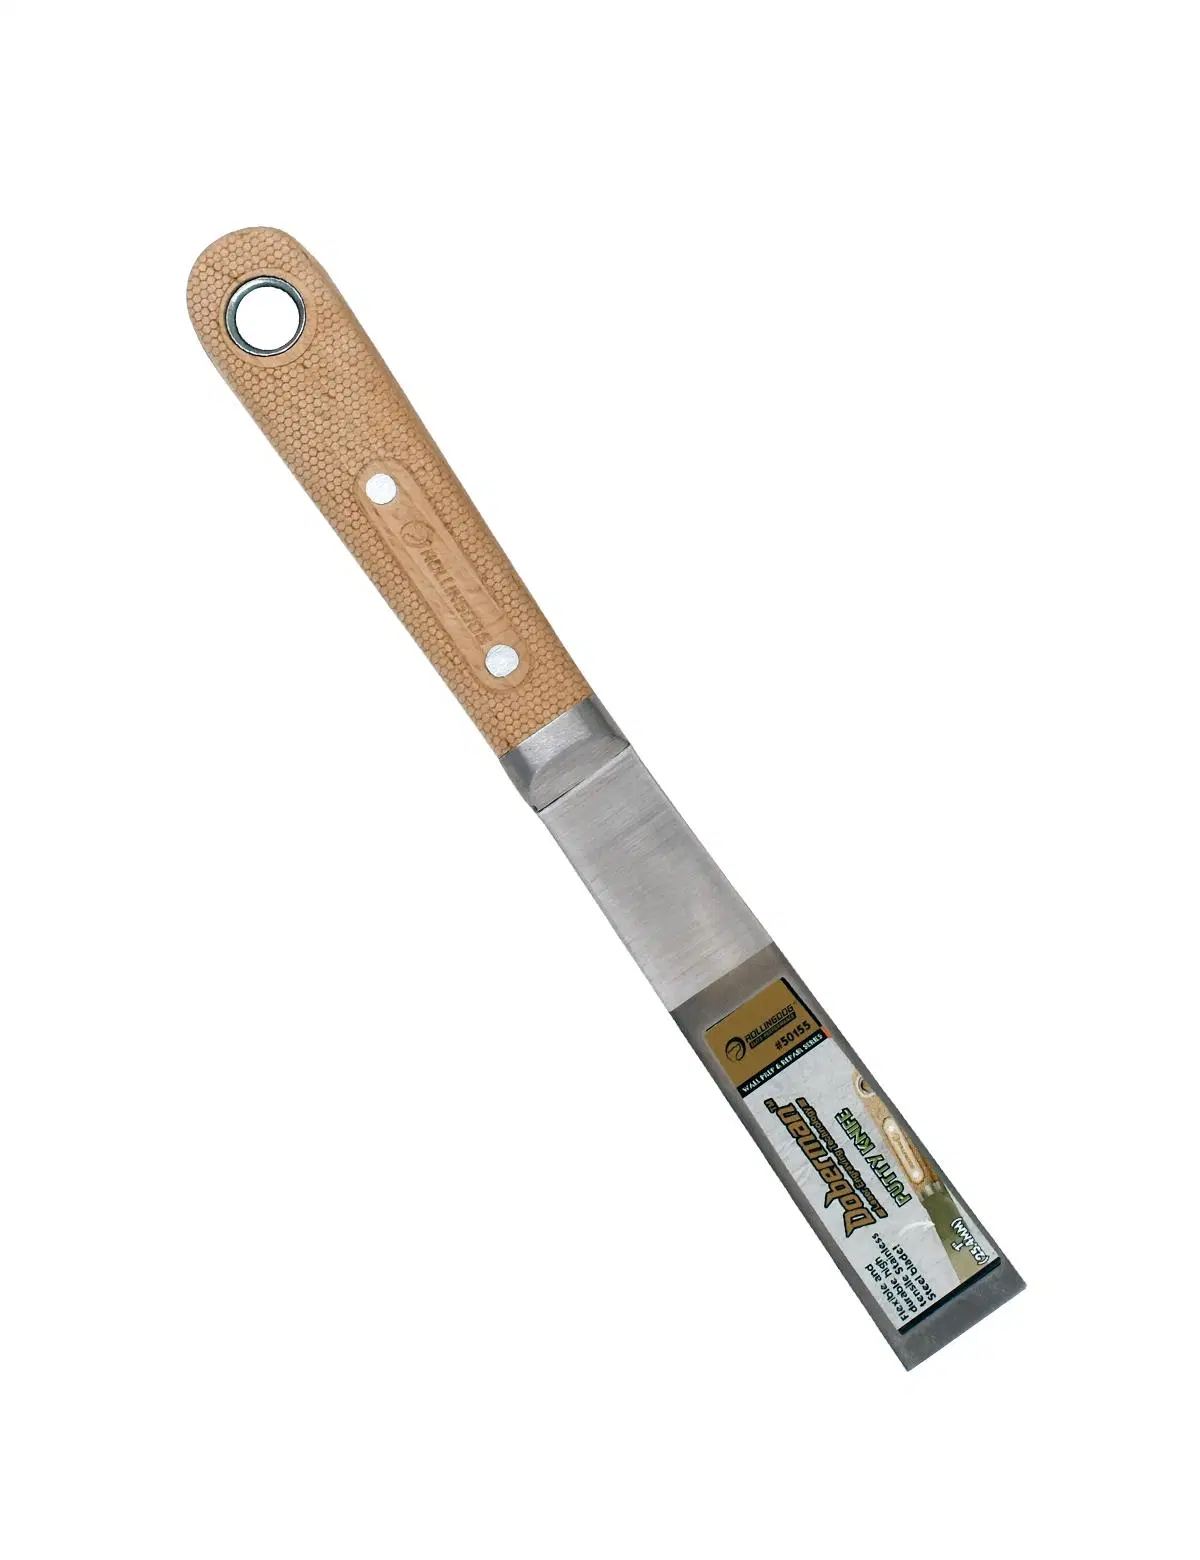 RollingDog-Elite Doberman 50155 420 من الفولاذ المقاوم للصدأ 1 بوصة ليزر putty Knife مقبض خشب الزان منقوش